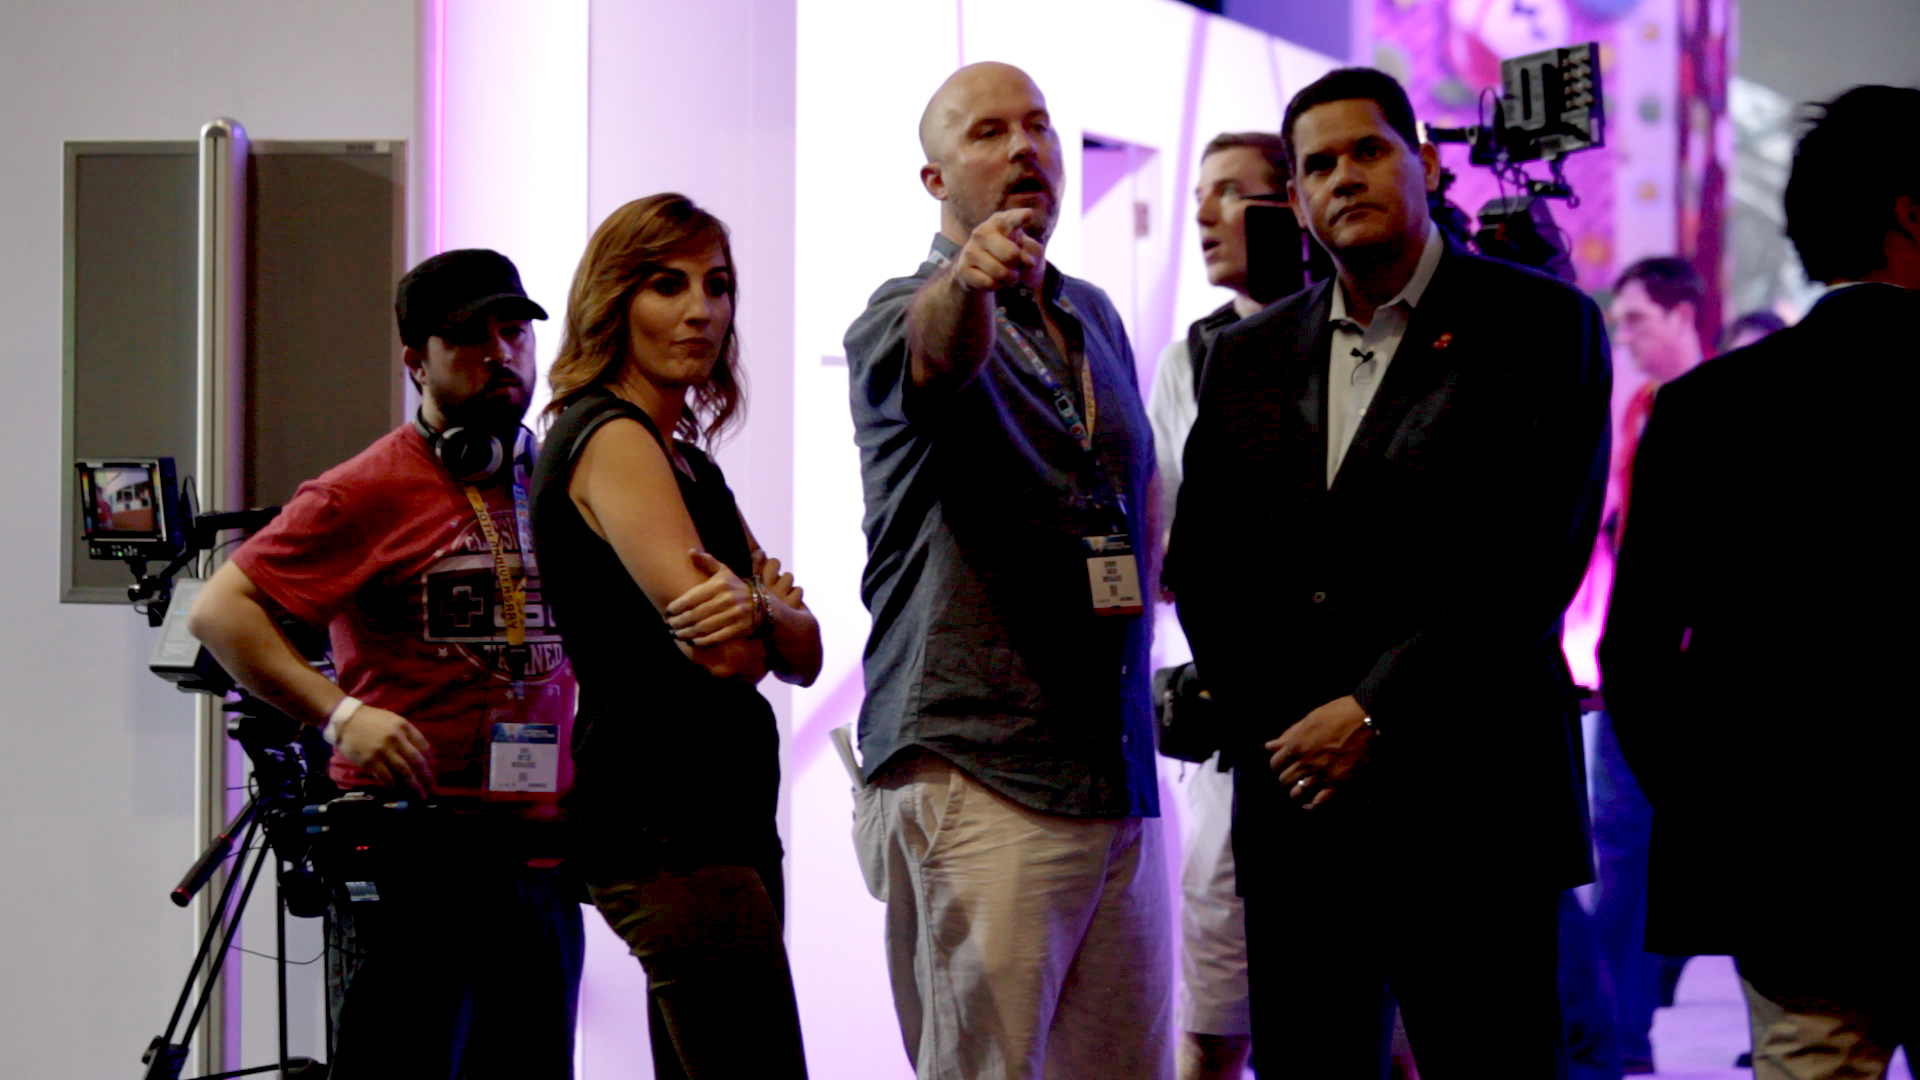 Jeremy Snead with host Alison Haislip taking Nintendo CEO Reggie Fils-Aimee through shots at E3 2015.